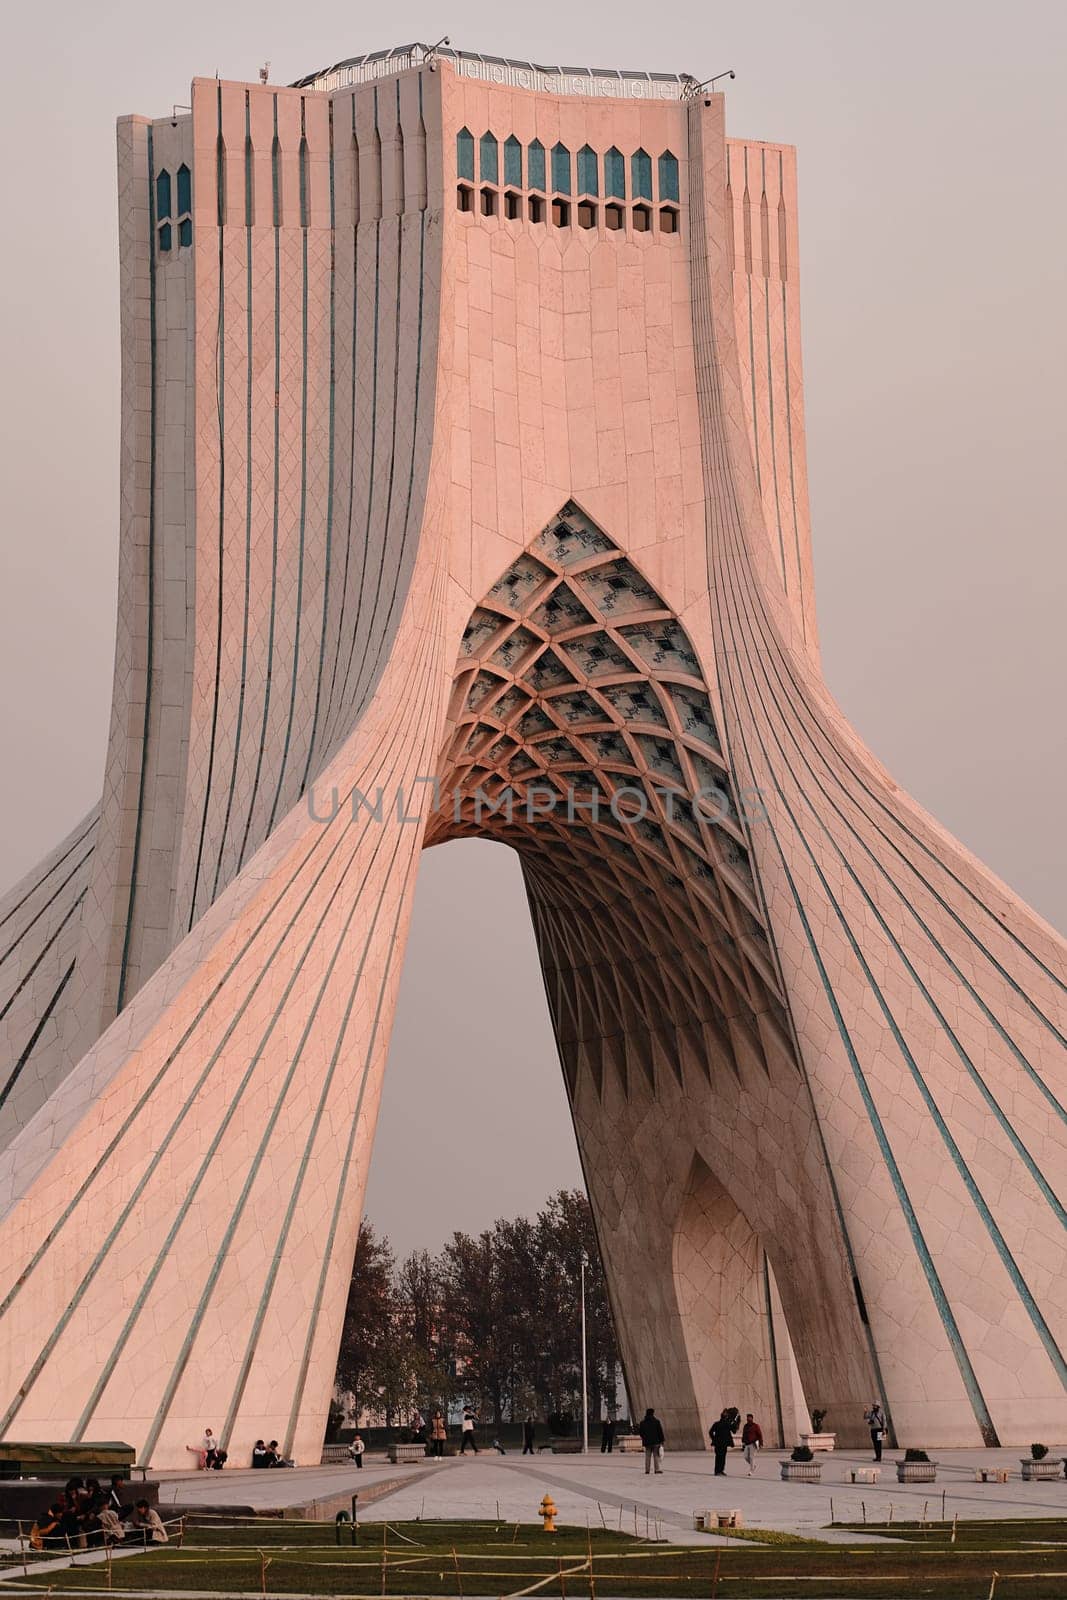 Azadi Tower is a symbol of freedom in Iran, the main symbol of Iran's capital. MS ZI LA Azadi Tower - Freedom Tower, the gateway to Tehran, Popular tourist point at twilight. 02.12.22 Tehran, Iran.